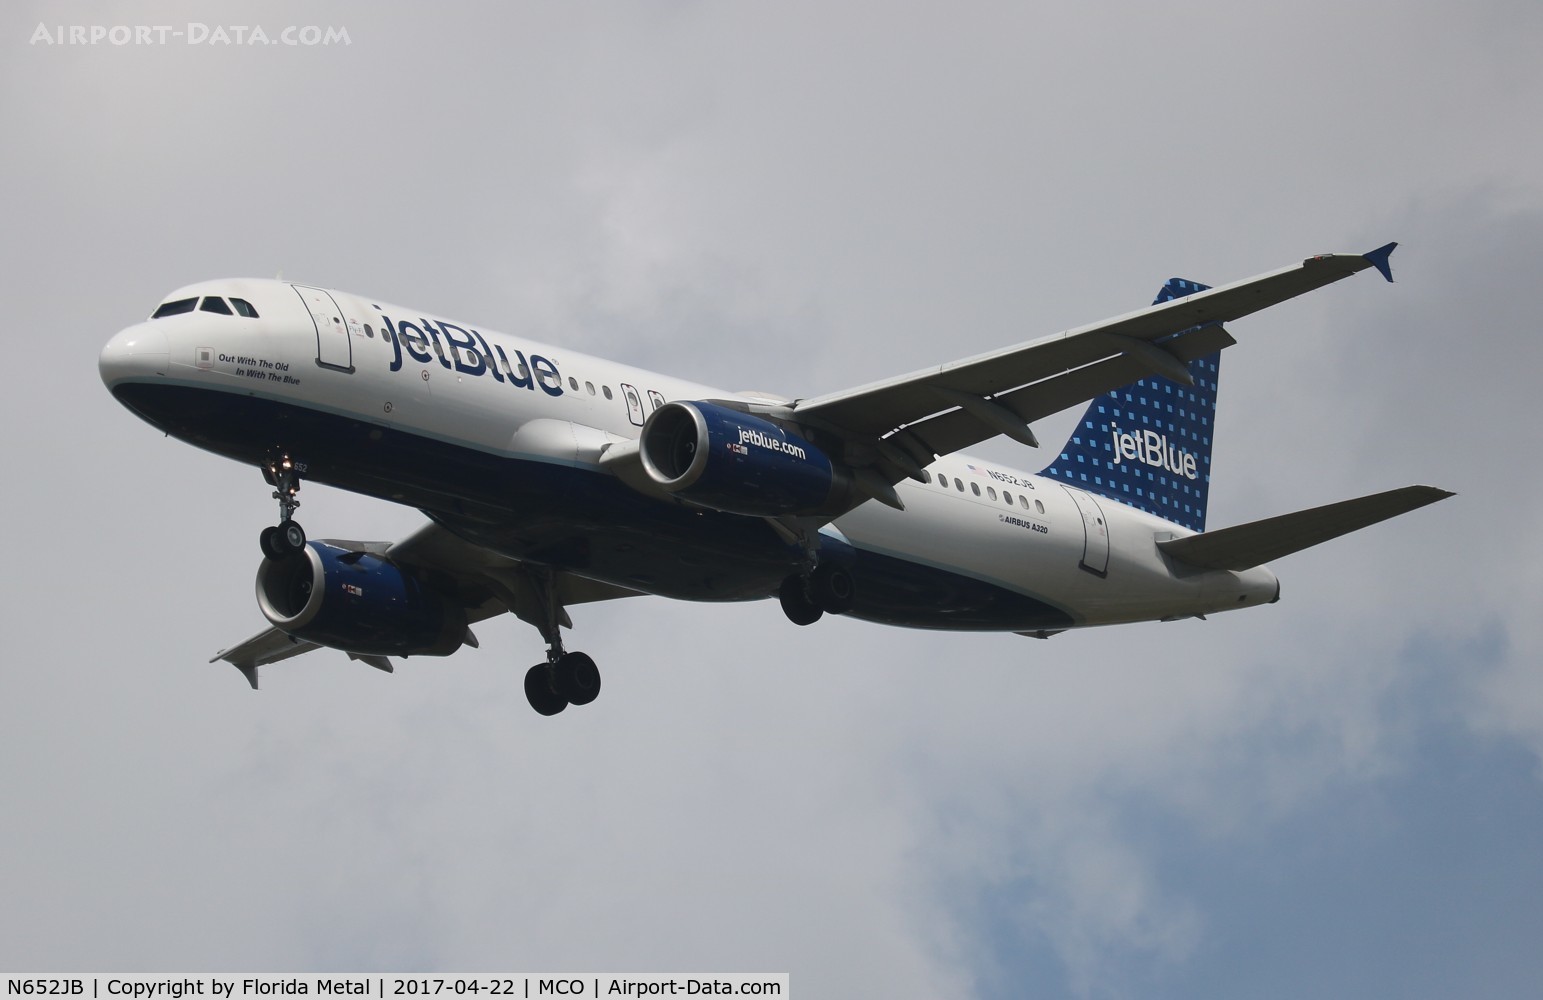 N652JB, 2007 Airbus A320-232 C/N 3029, Jet Blue